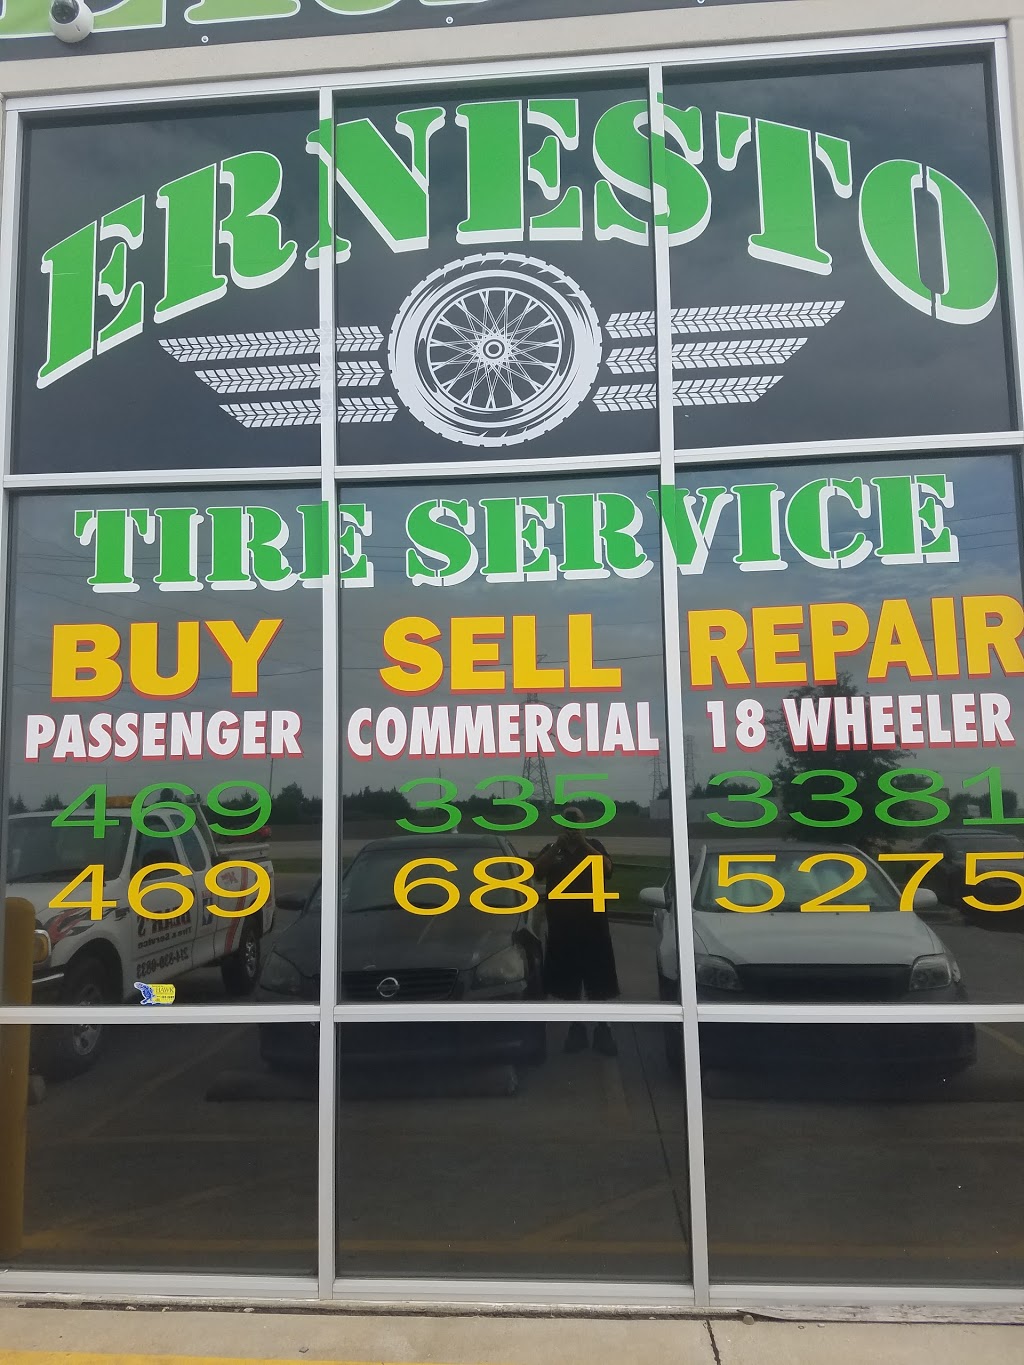 Ernesto Diesel Mechanic and Tire Services Dallas (469)335-3381